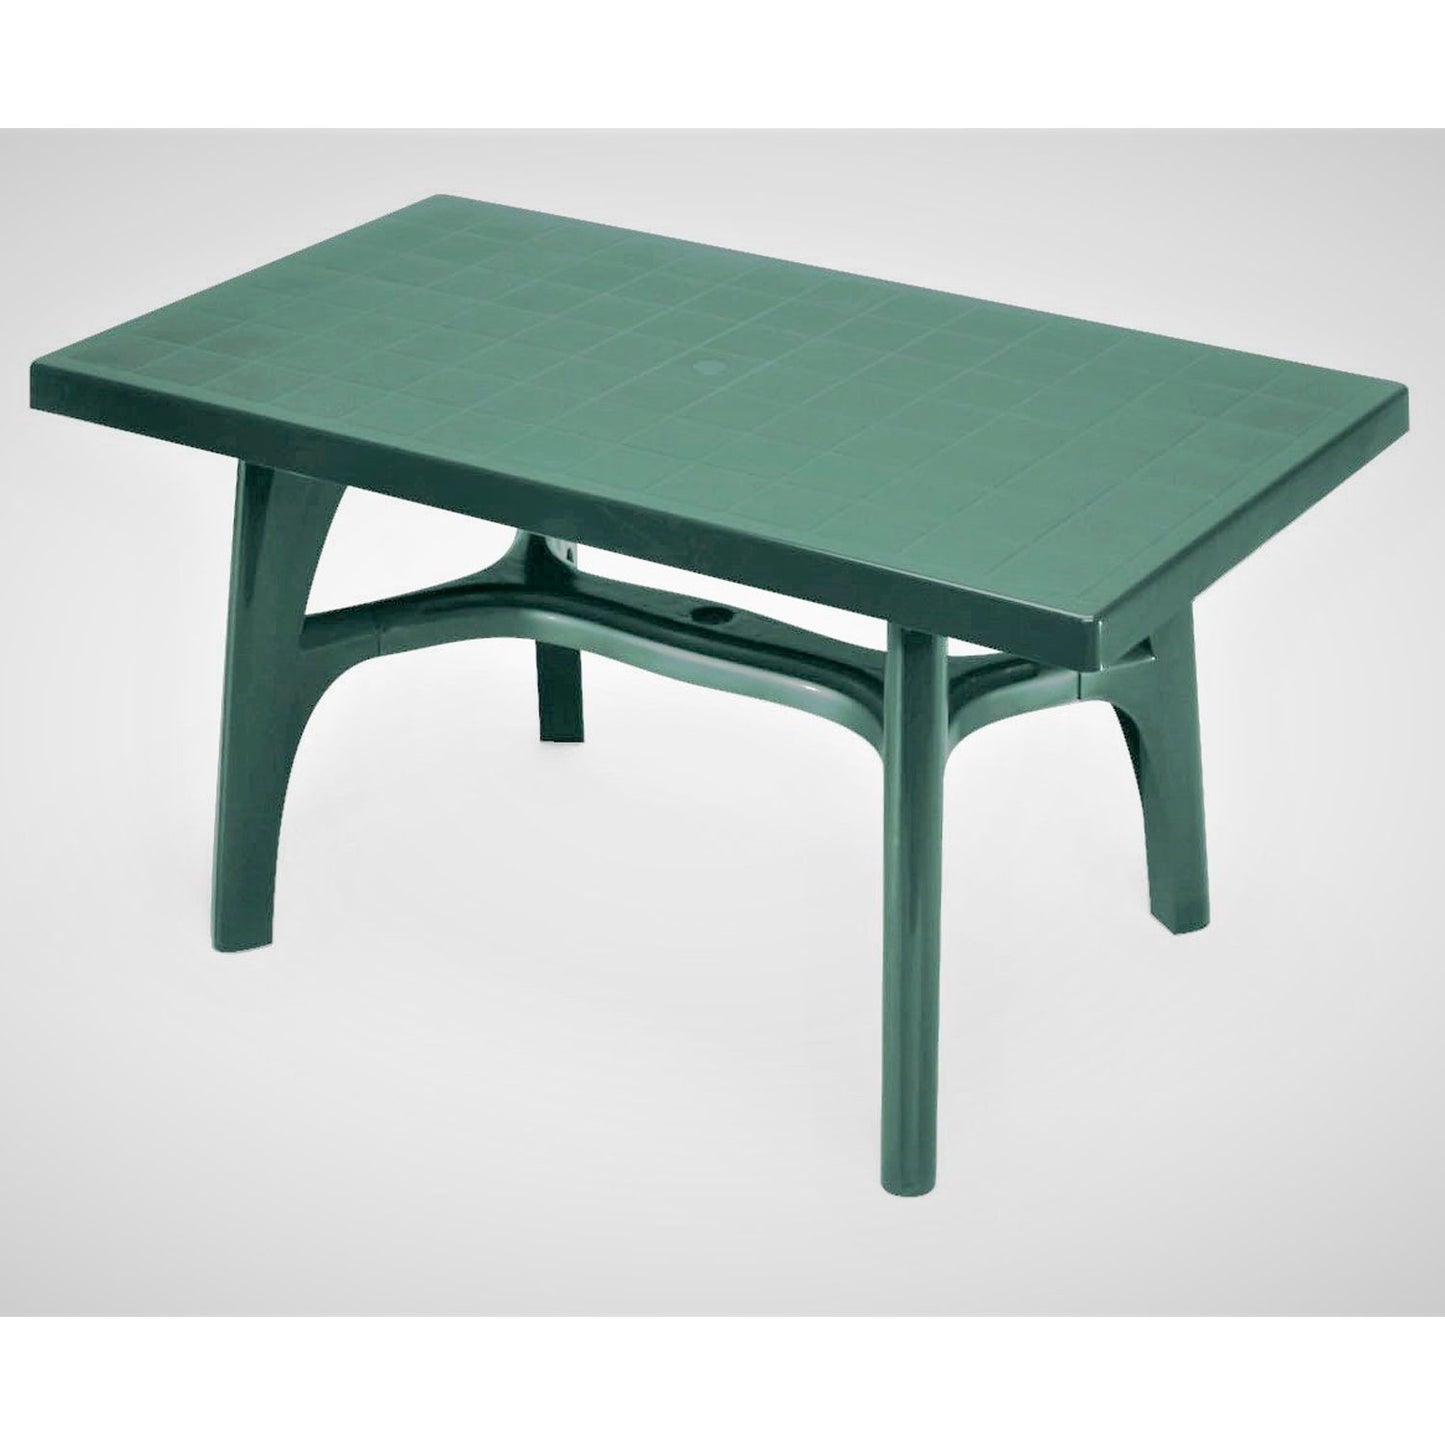 Rettango 140cm x 80cm Rectangular Dining Table by Scab Design